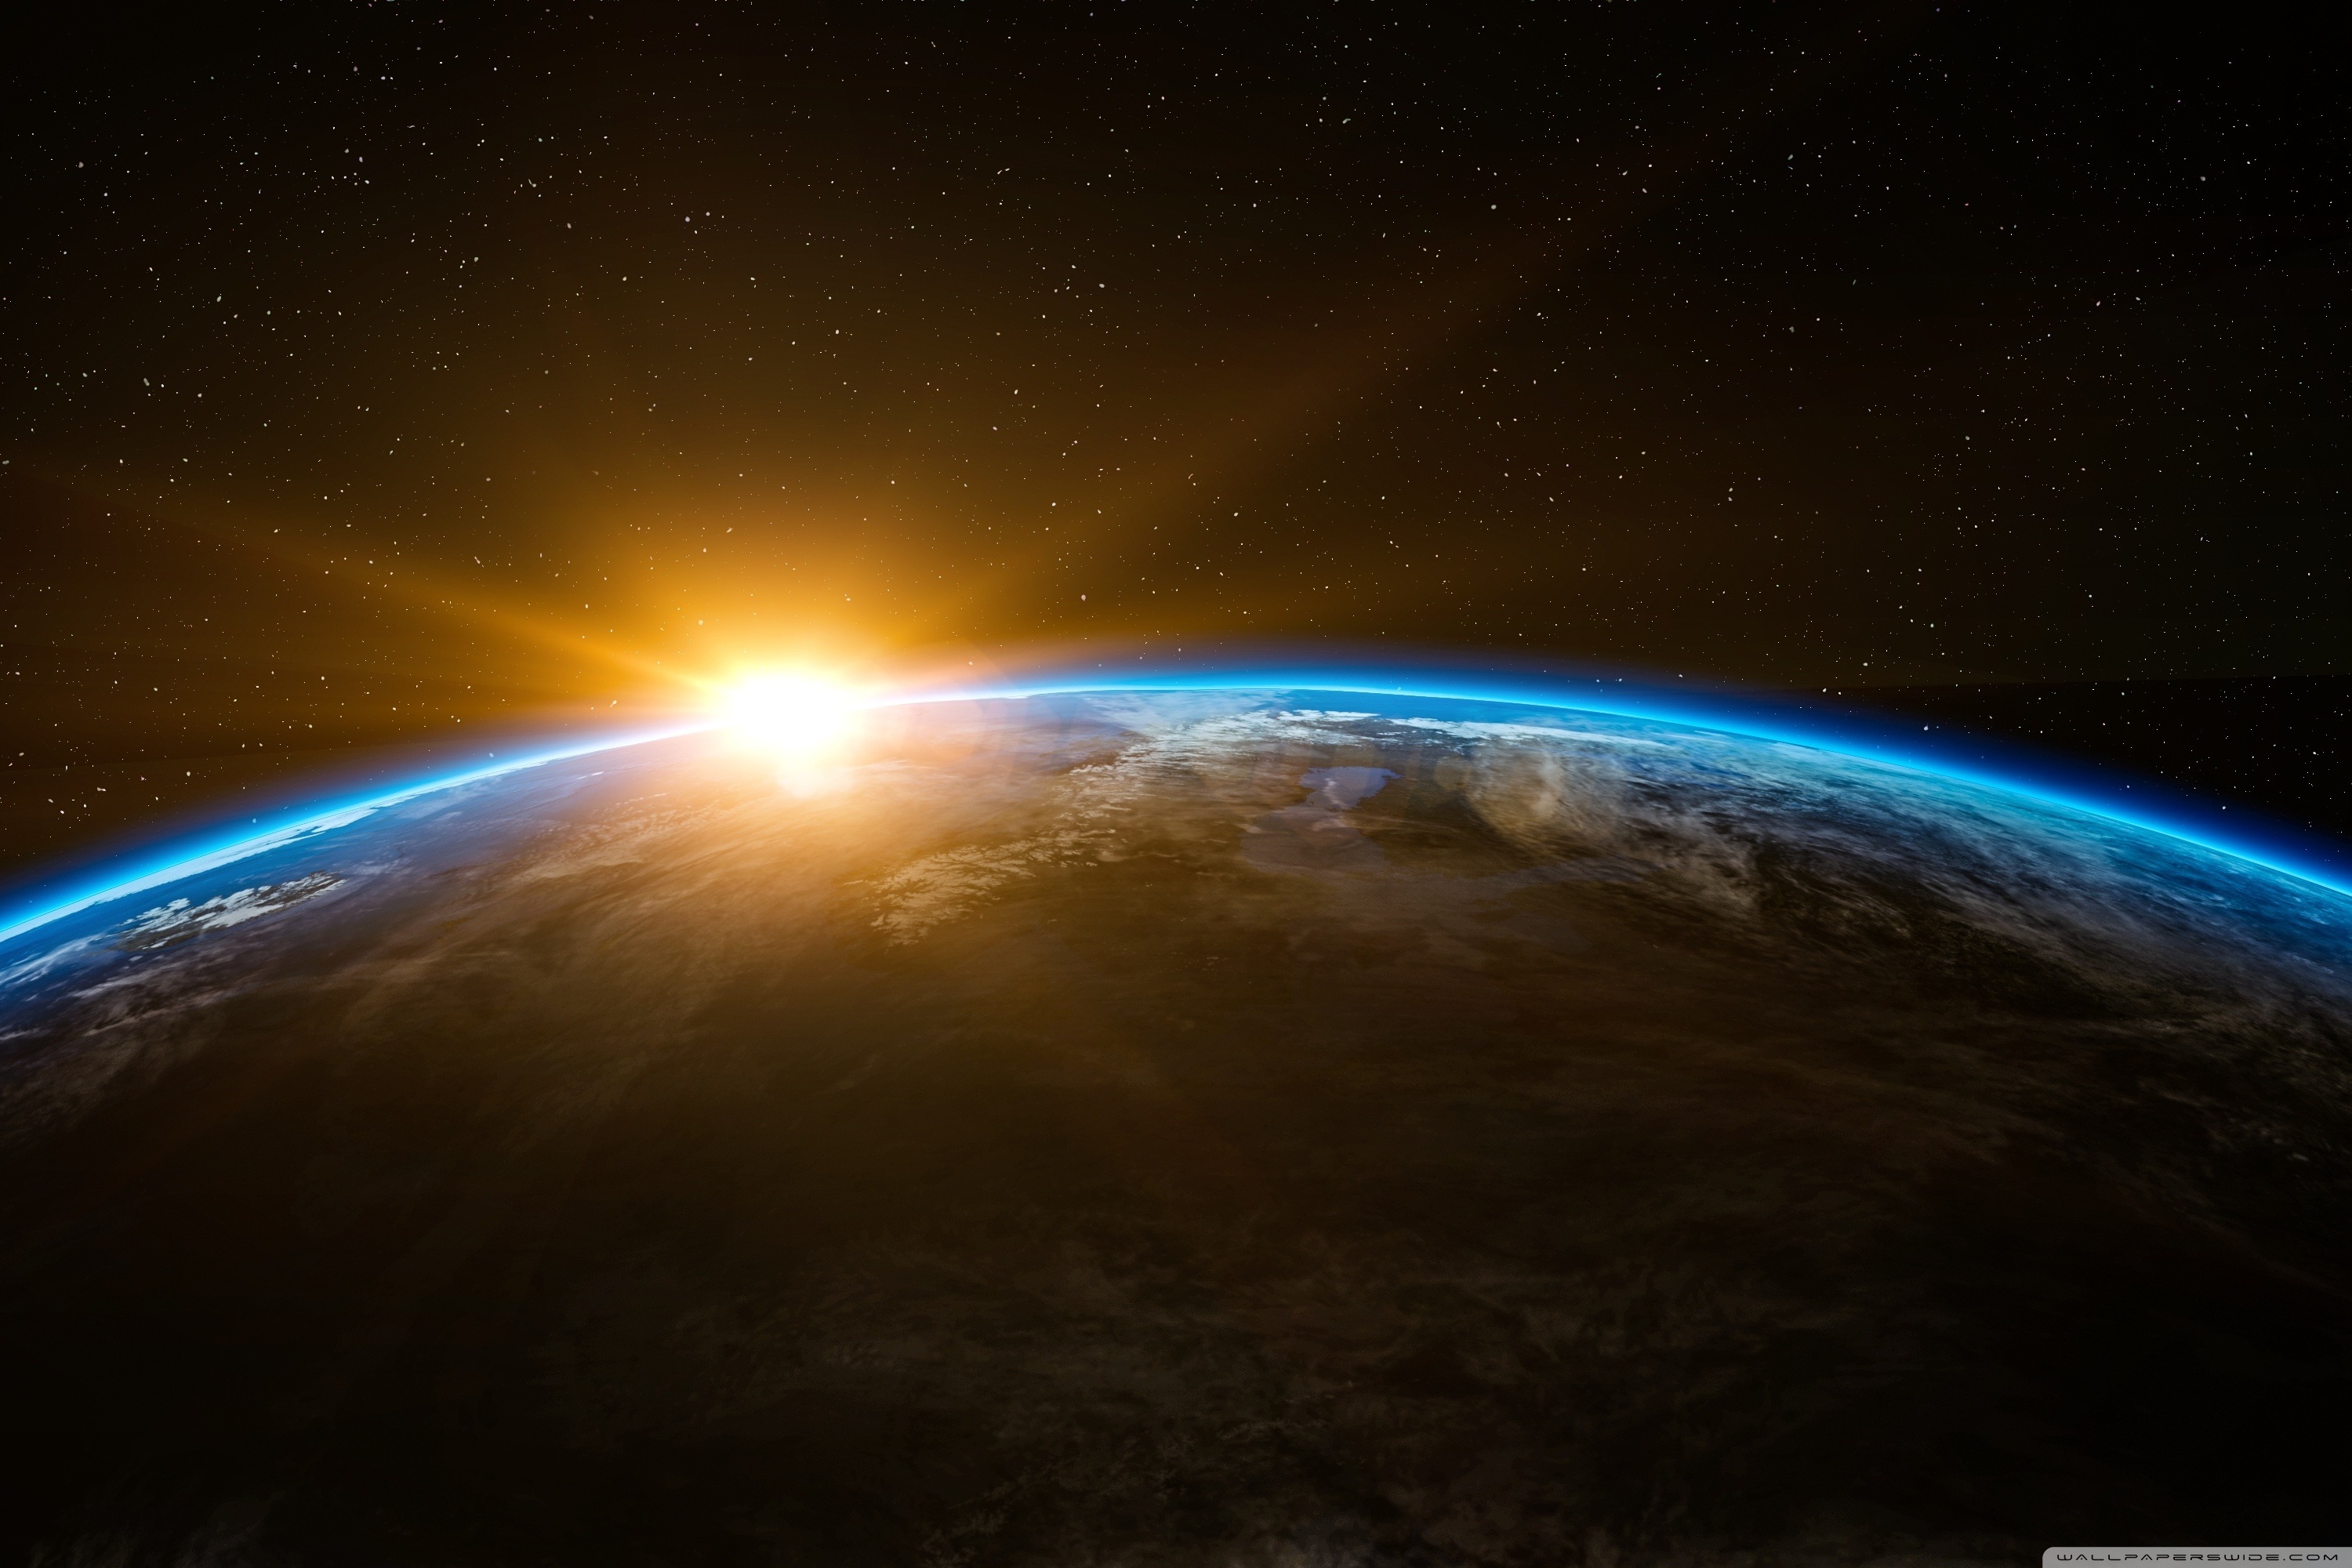 Sun Rising Over Earth - HD Wallpaper 